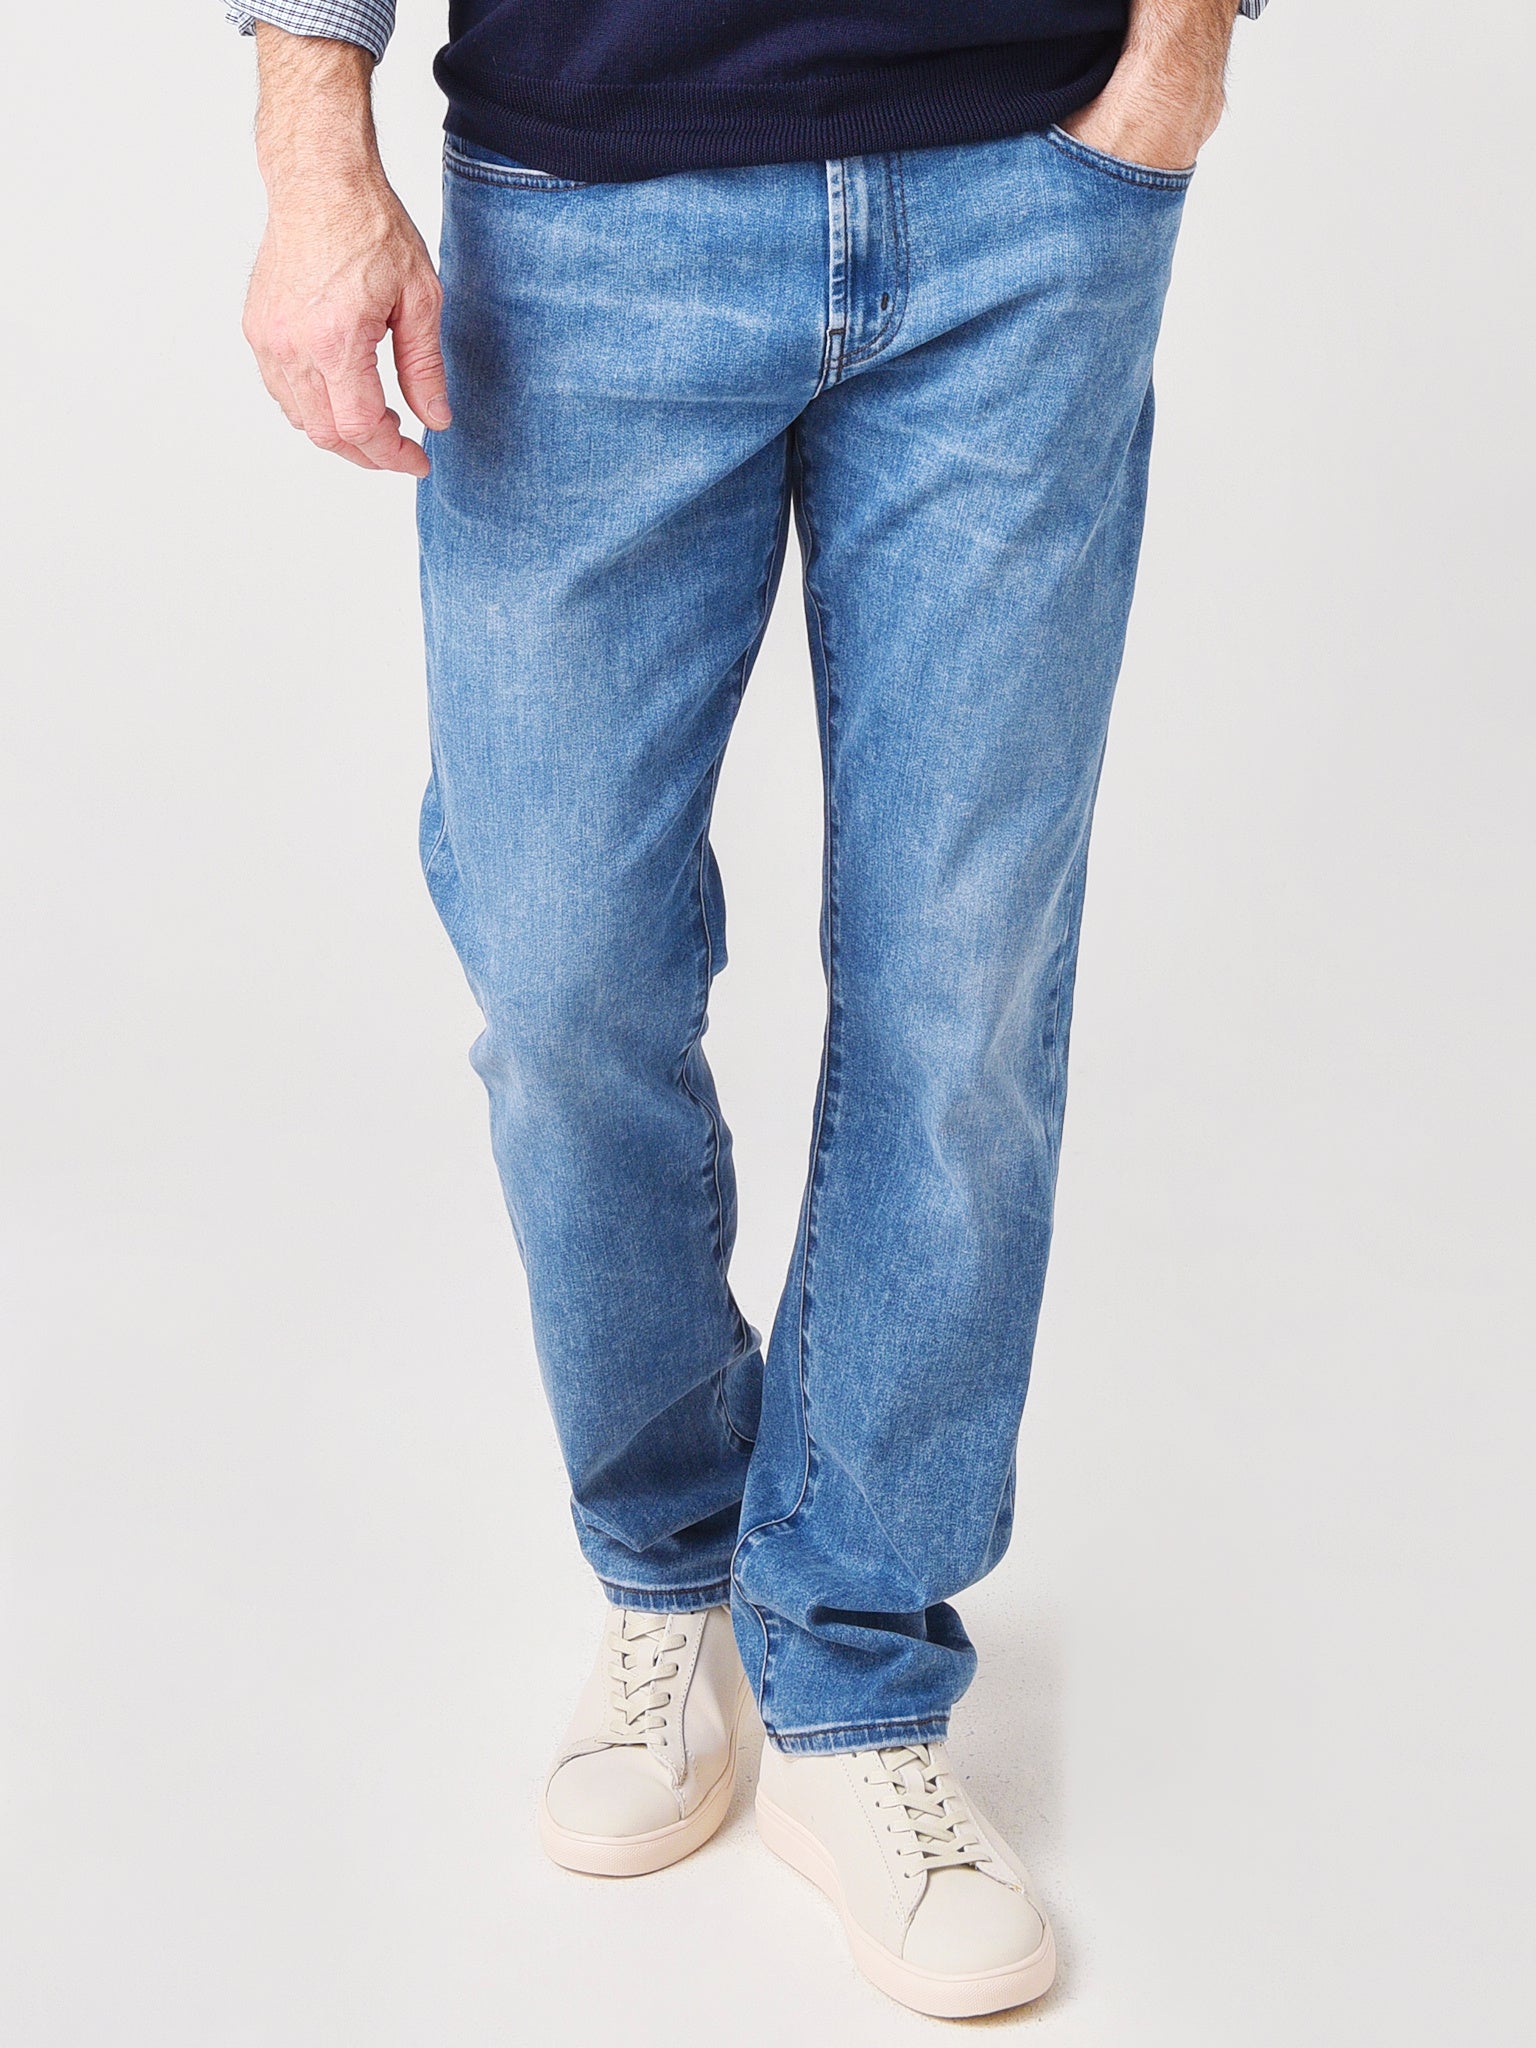 J Brand Stretch Slim Jeans for Men